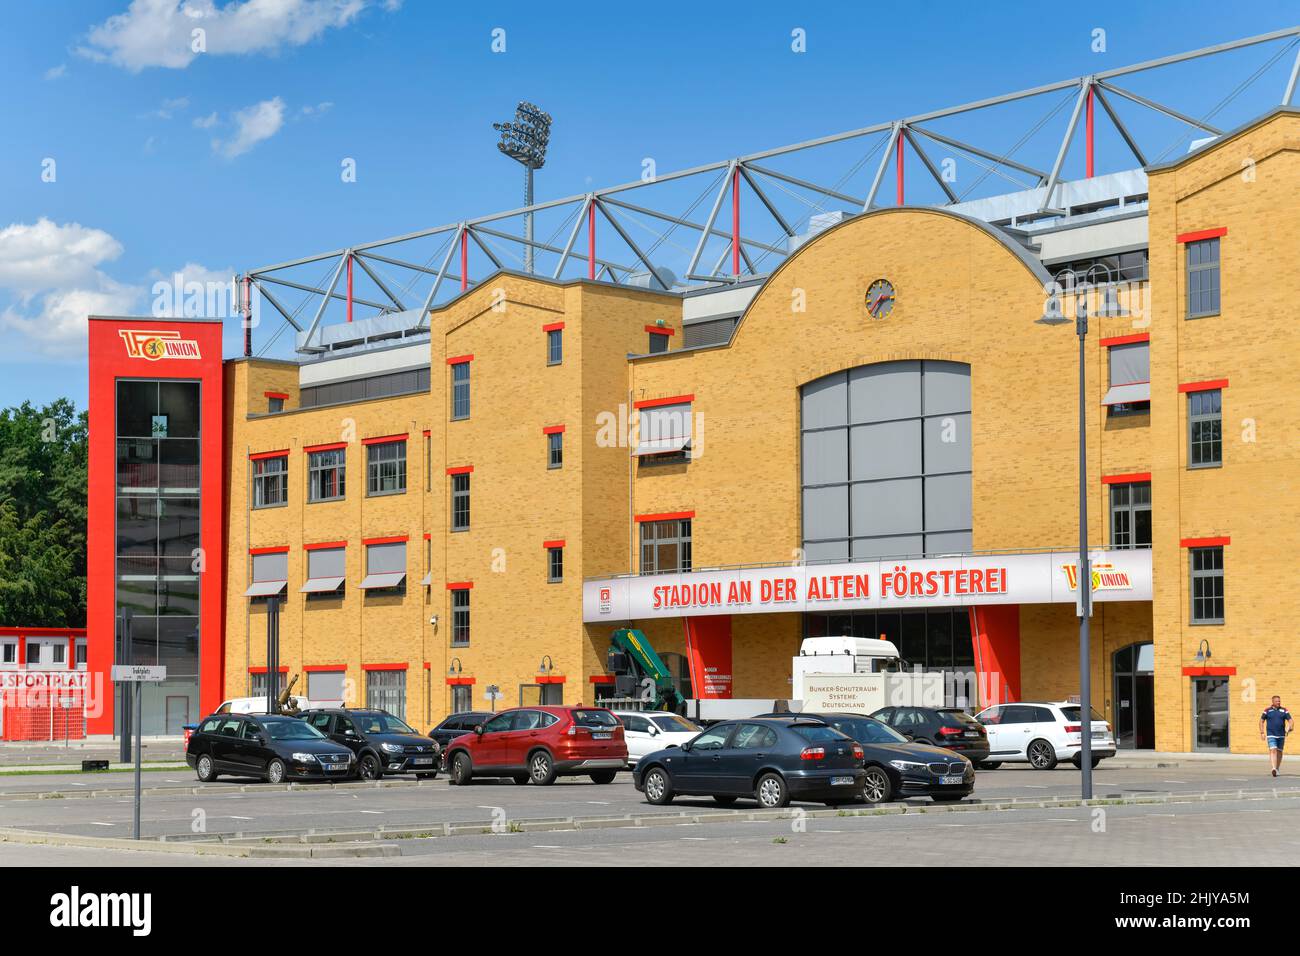 Stadion An der Alten Försterei, 1. FC Union Berlin, Köpenick, Treptow-Köpenick, Berlin, Deutschland Stock Photo